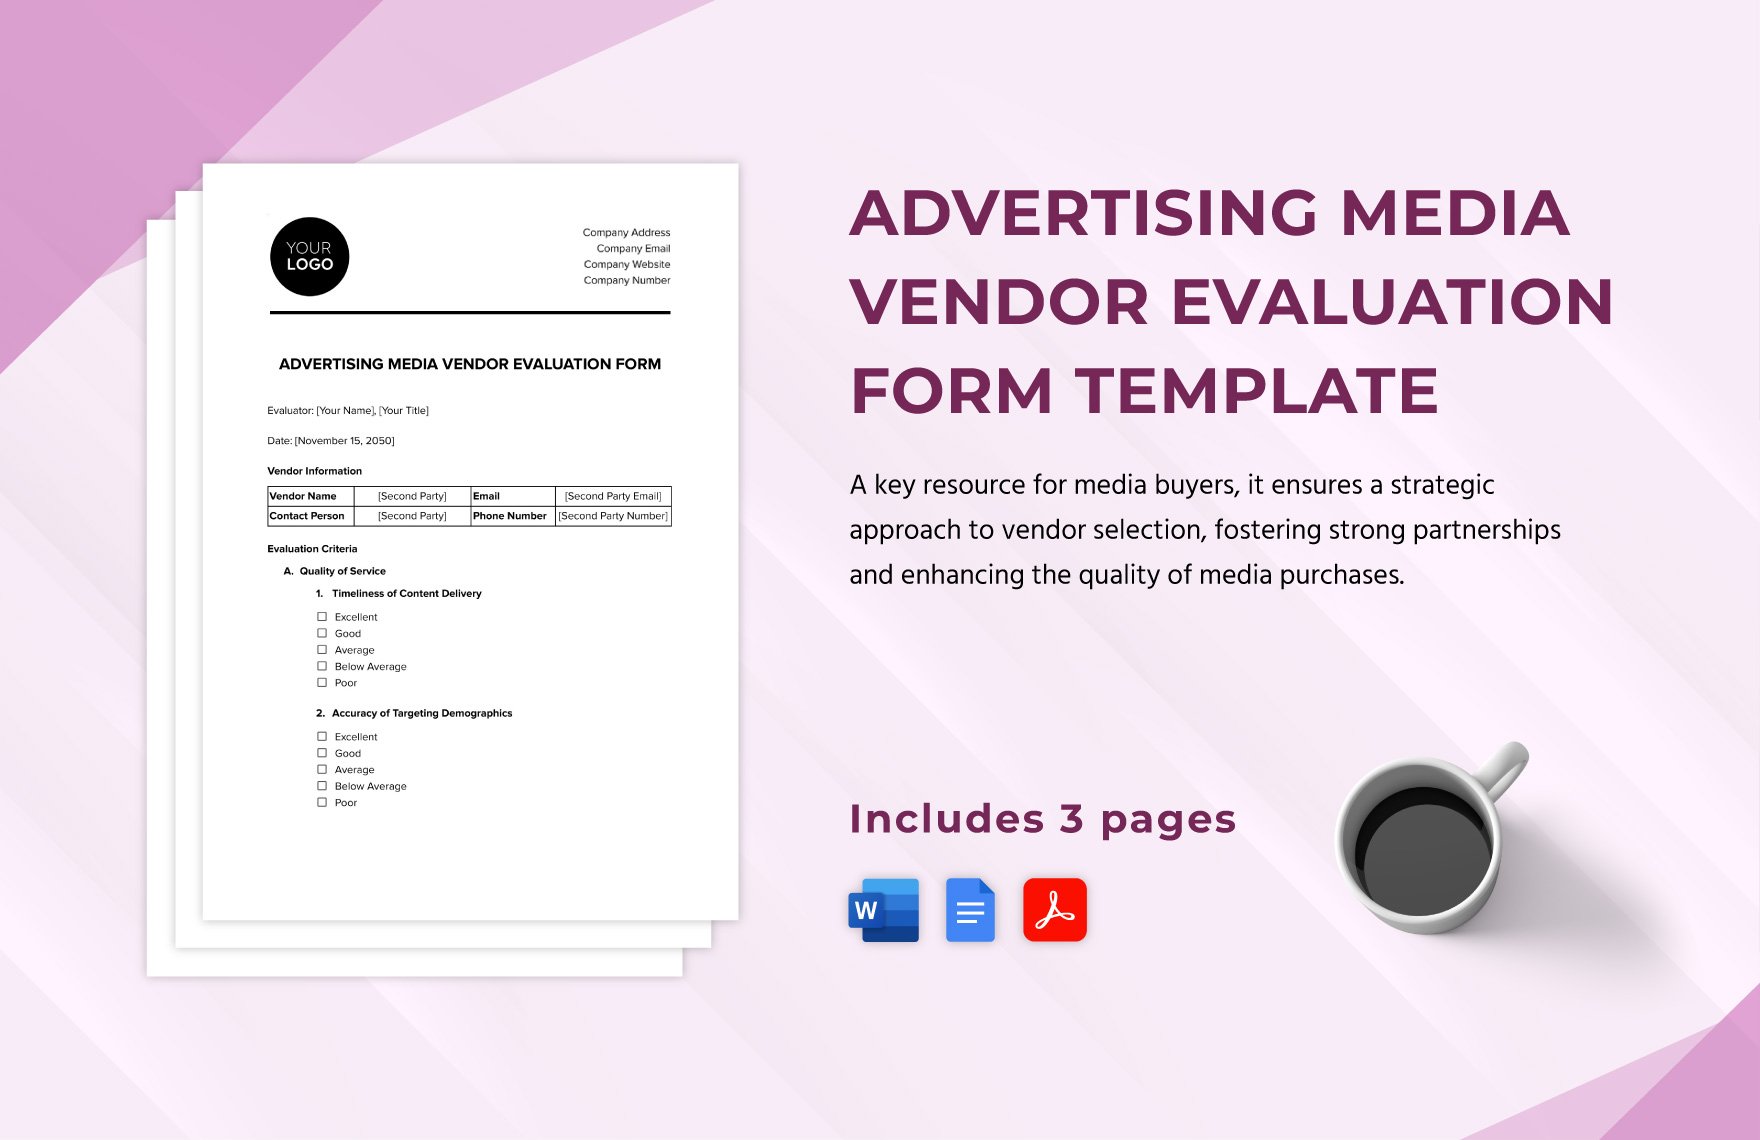 Advertising Media Vendor Evaluation Form Template in Word, Google Docs, PDF